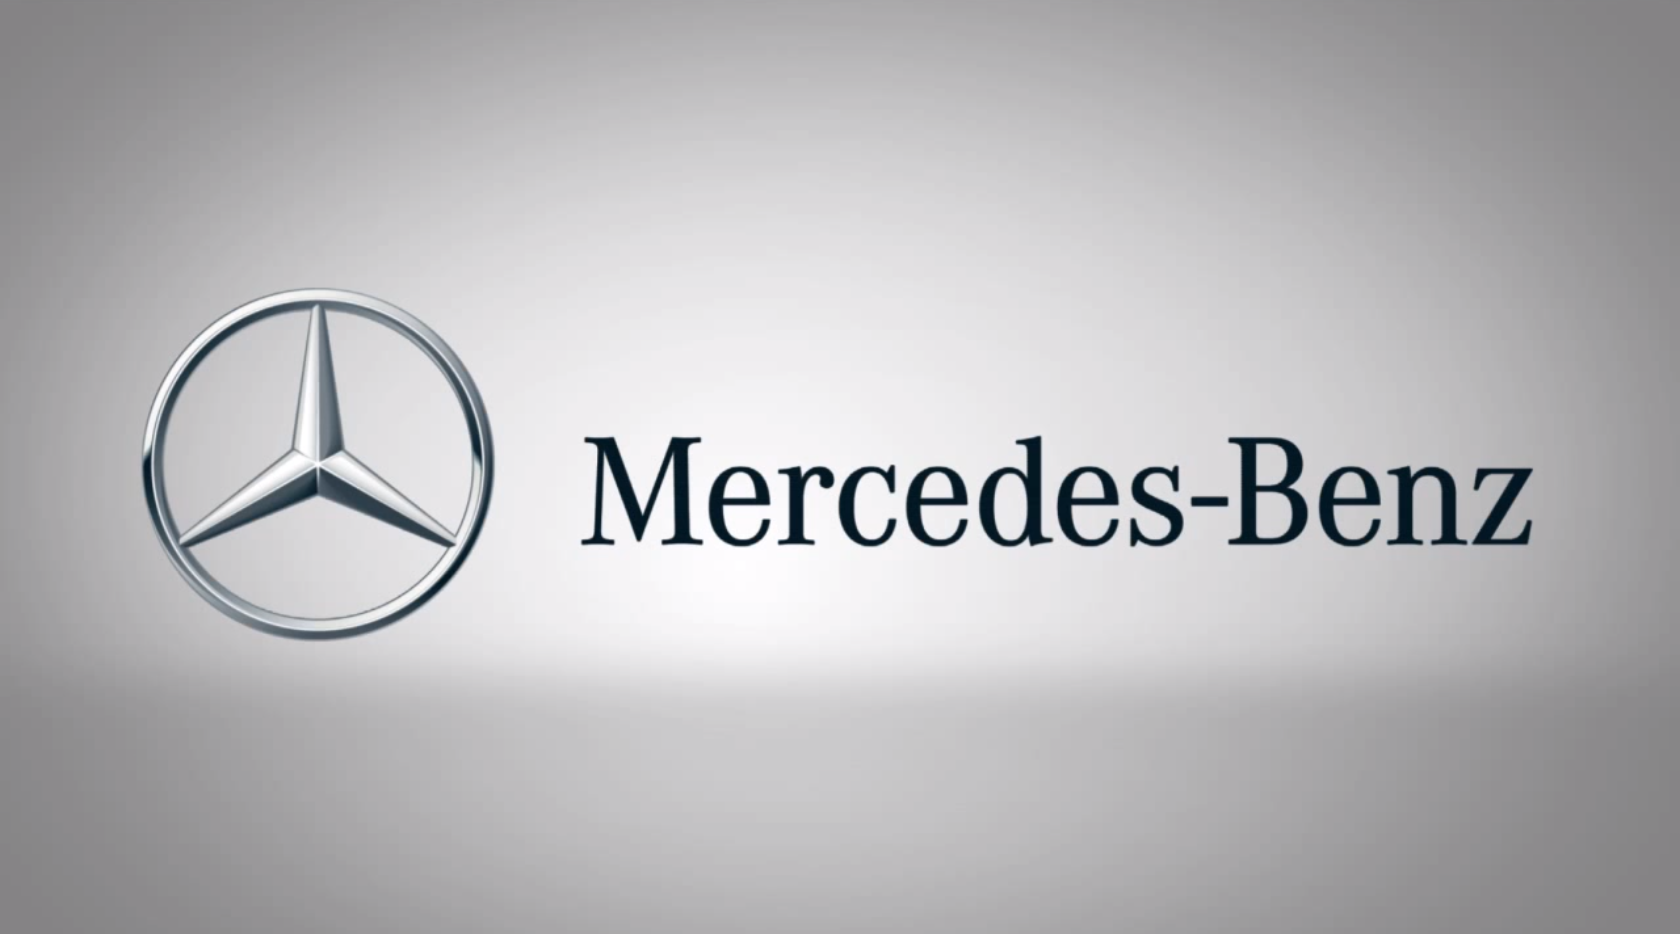 Daimler AG Mercedes-Benz. Мерседес- Бенц/ Mercedes-Benz лого. Мерседес Даймлер Бенц. Mercedes Benz Daimler logo. Полное название мерседес